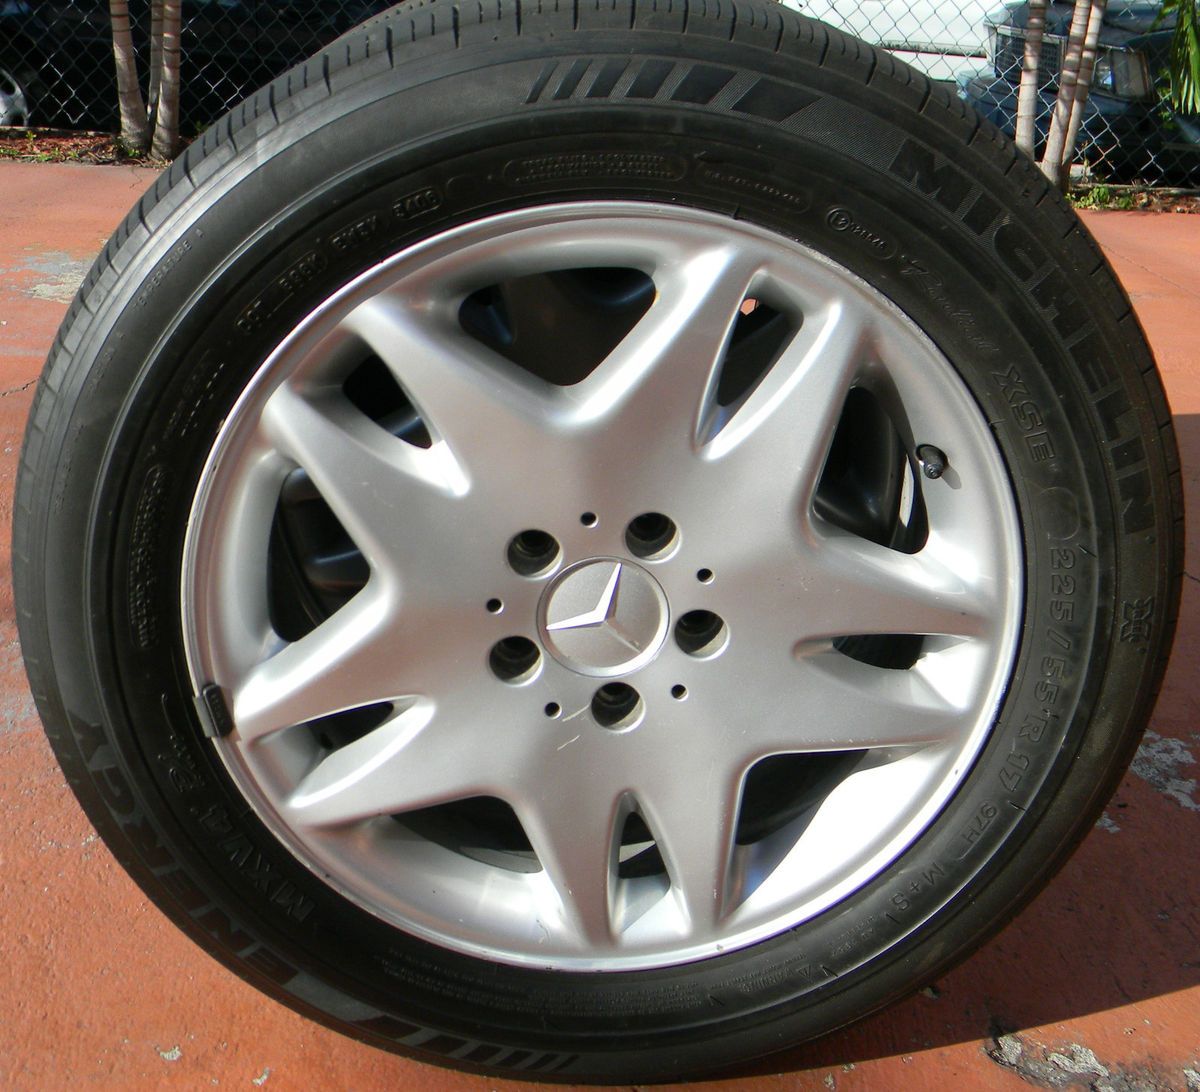 Benz CL500 00 06 Factory Stock Rims Wheels Michelin Tires 18 4